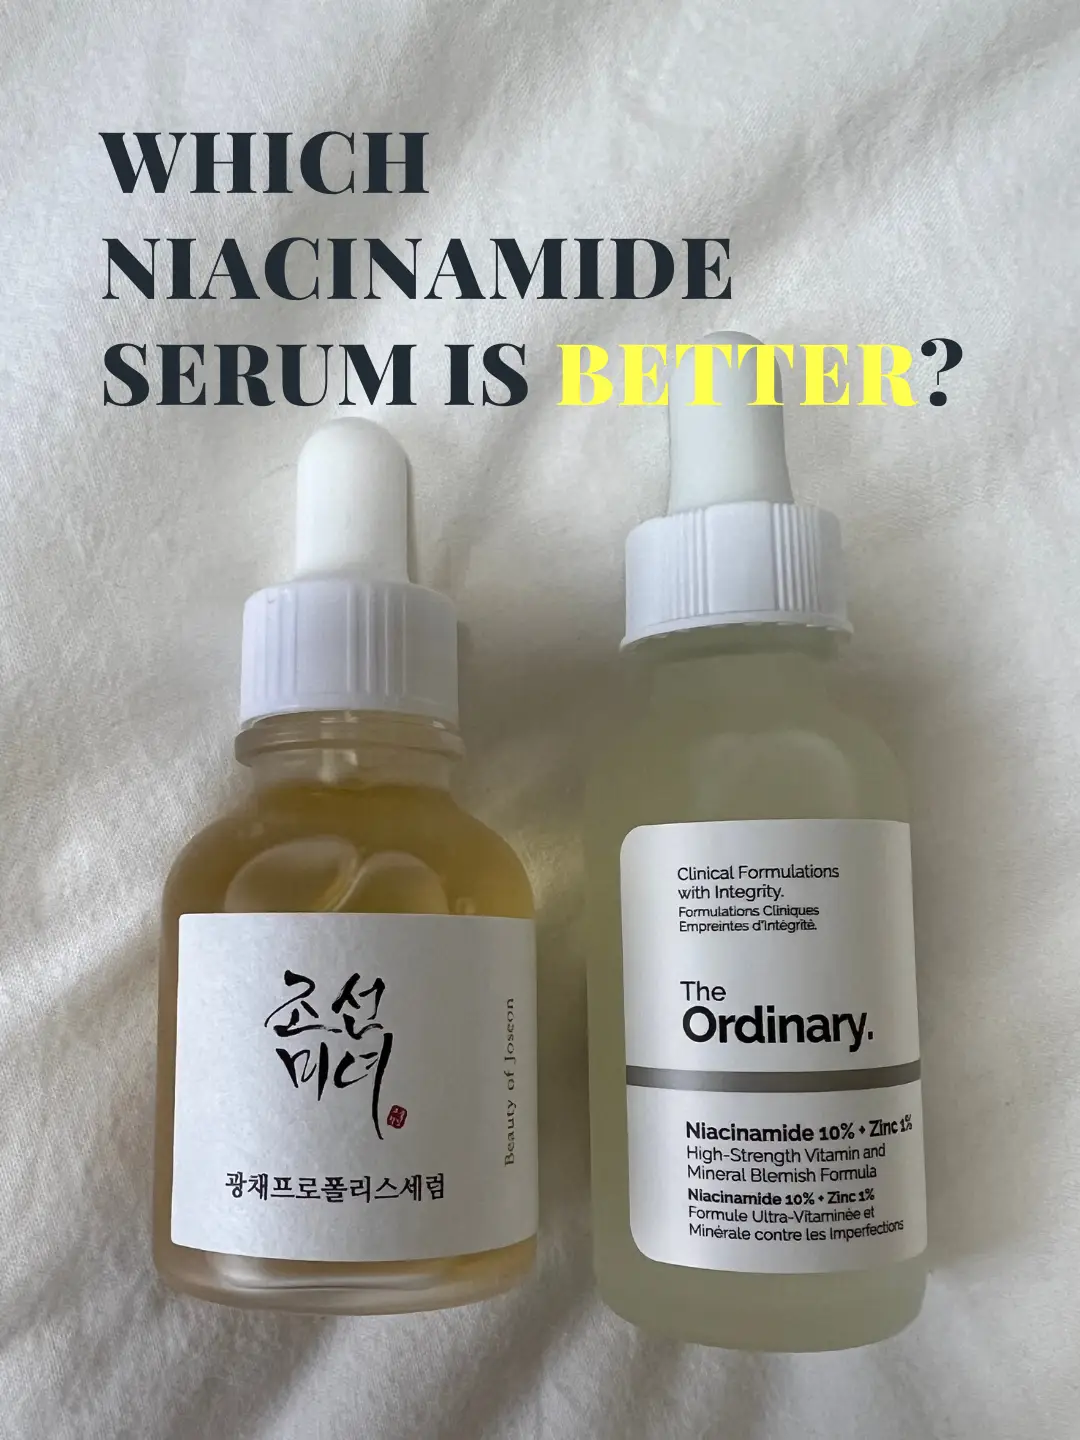 boj or the ordinary nincinamide serum? 🧐's images